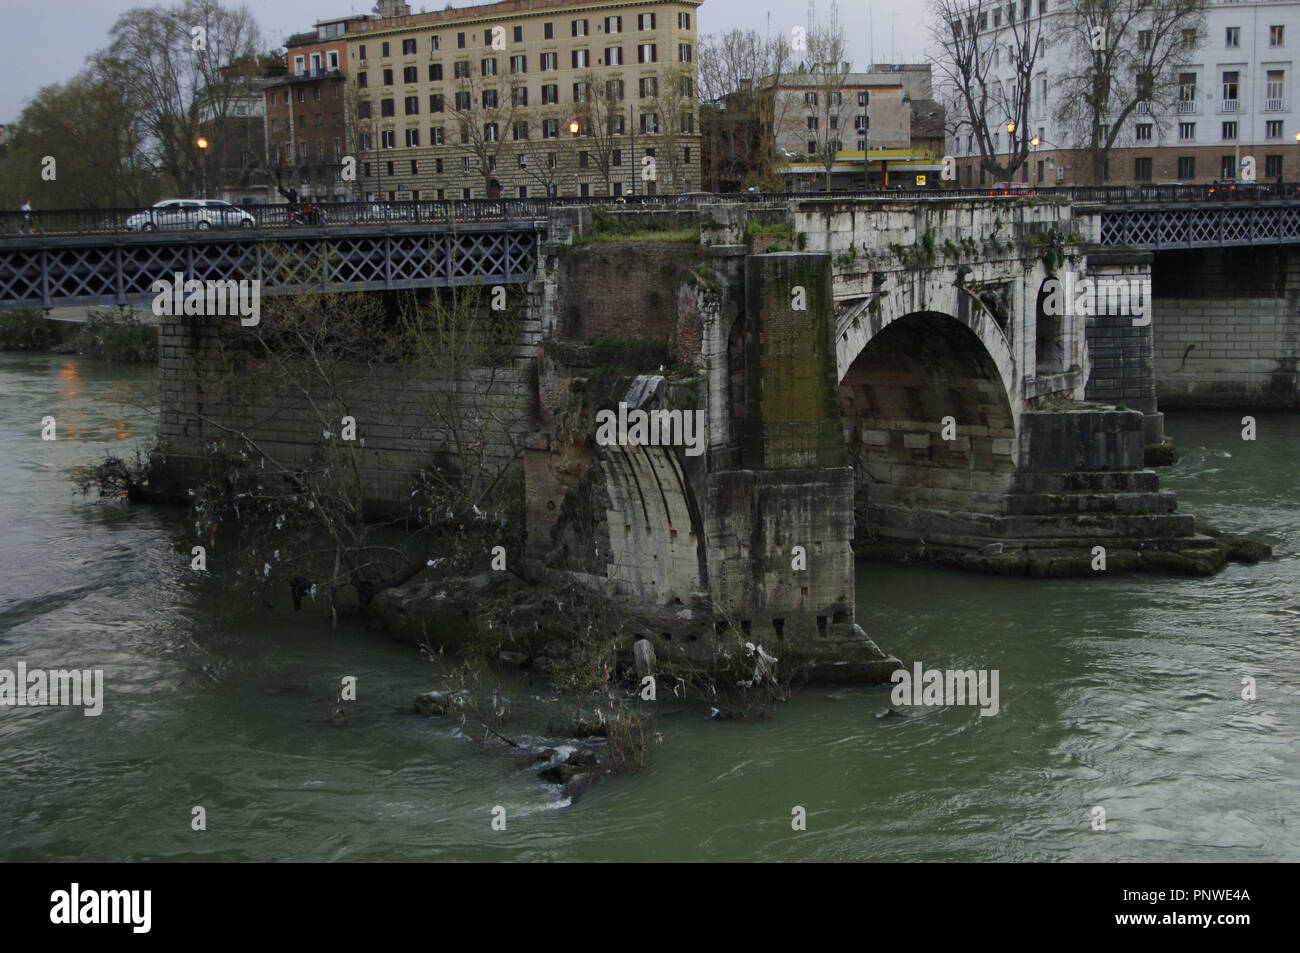 Italy. Rome. Pons Aemilius (Ponte Emilio) or Broken Bridge (Ponte Rotto), 193 B.C. on the River Tiber, the first stone bridge built in Rome. Tiberina Island. Stock Photo